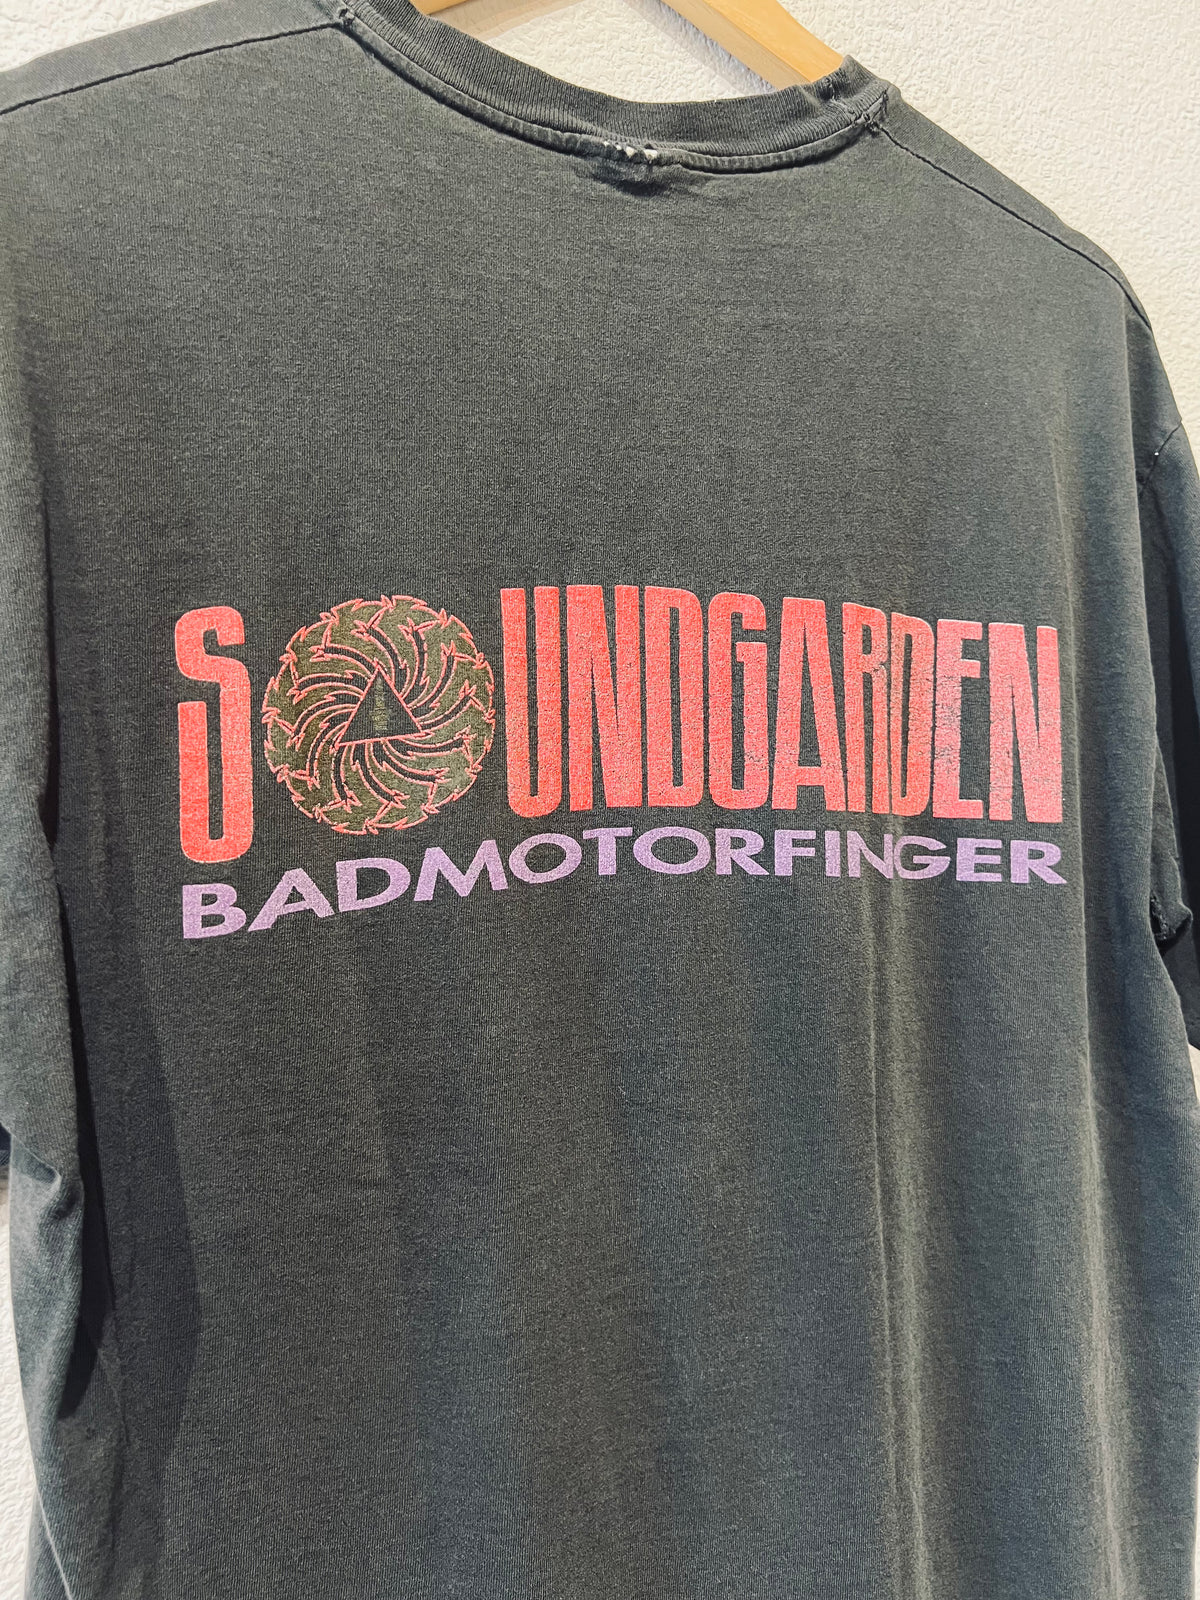 Soundgarden Badmotorfinger Vintage Tee